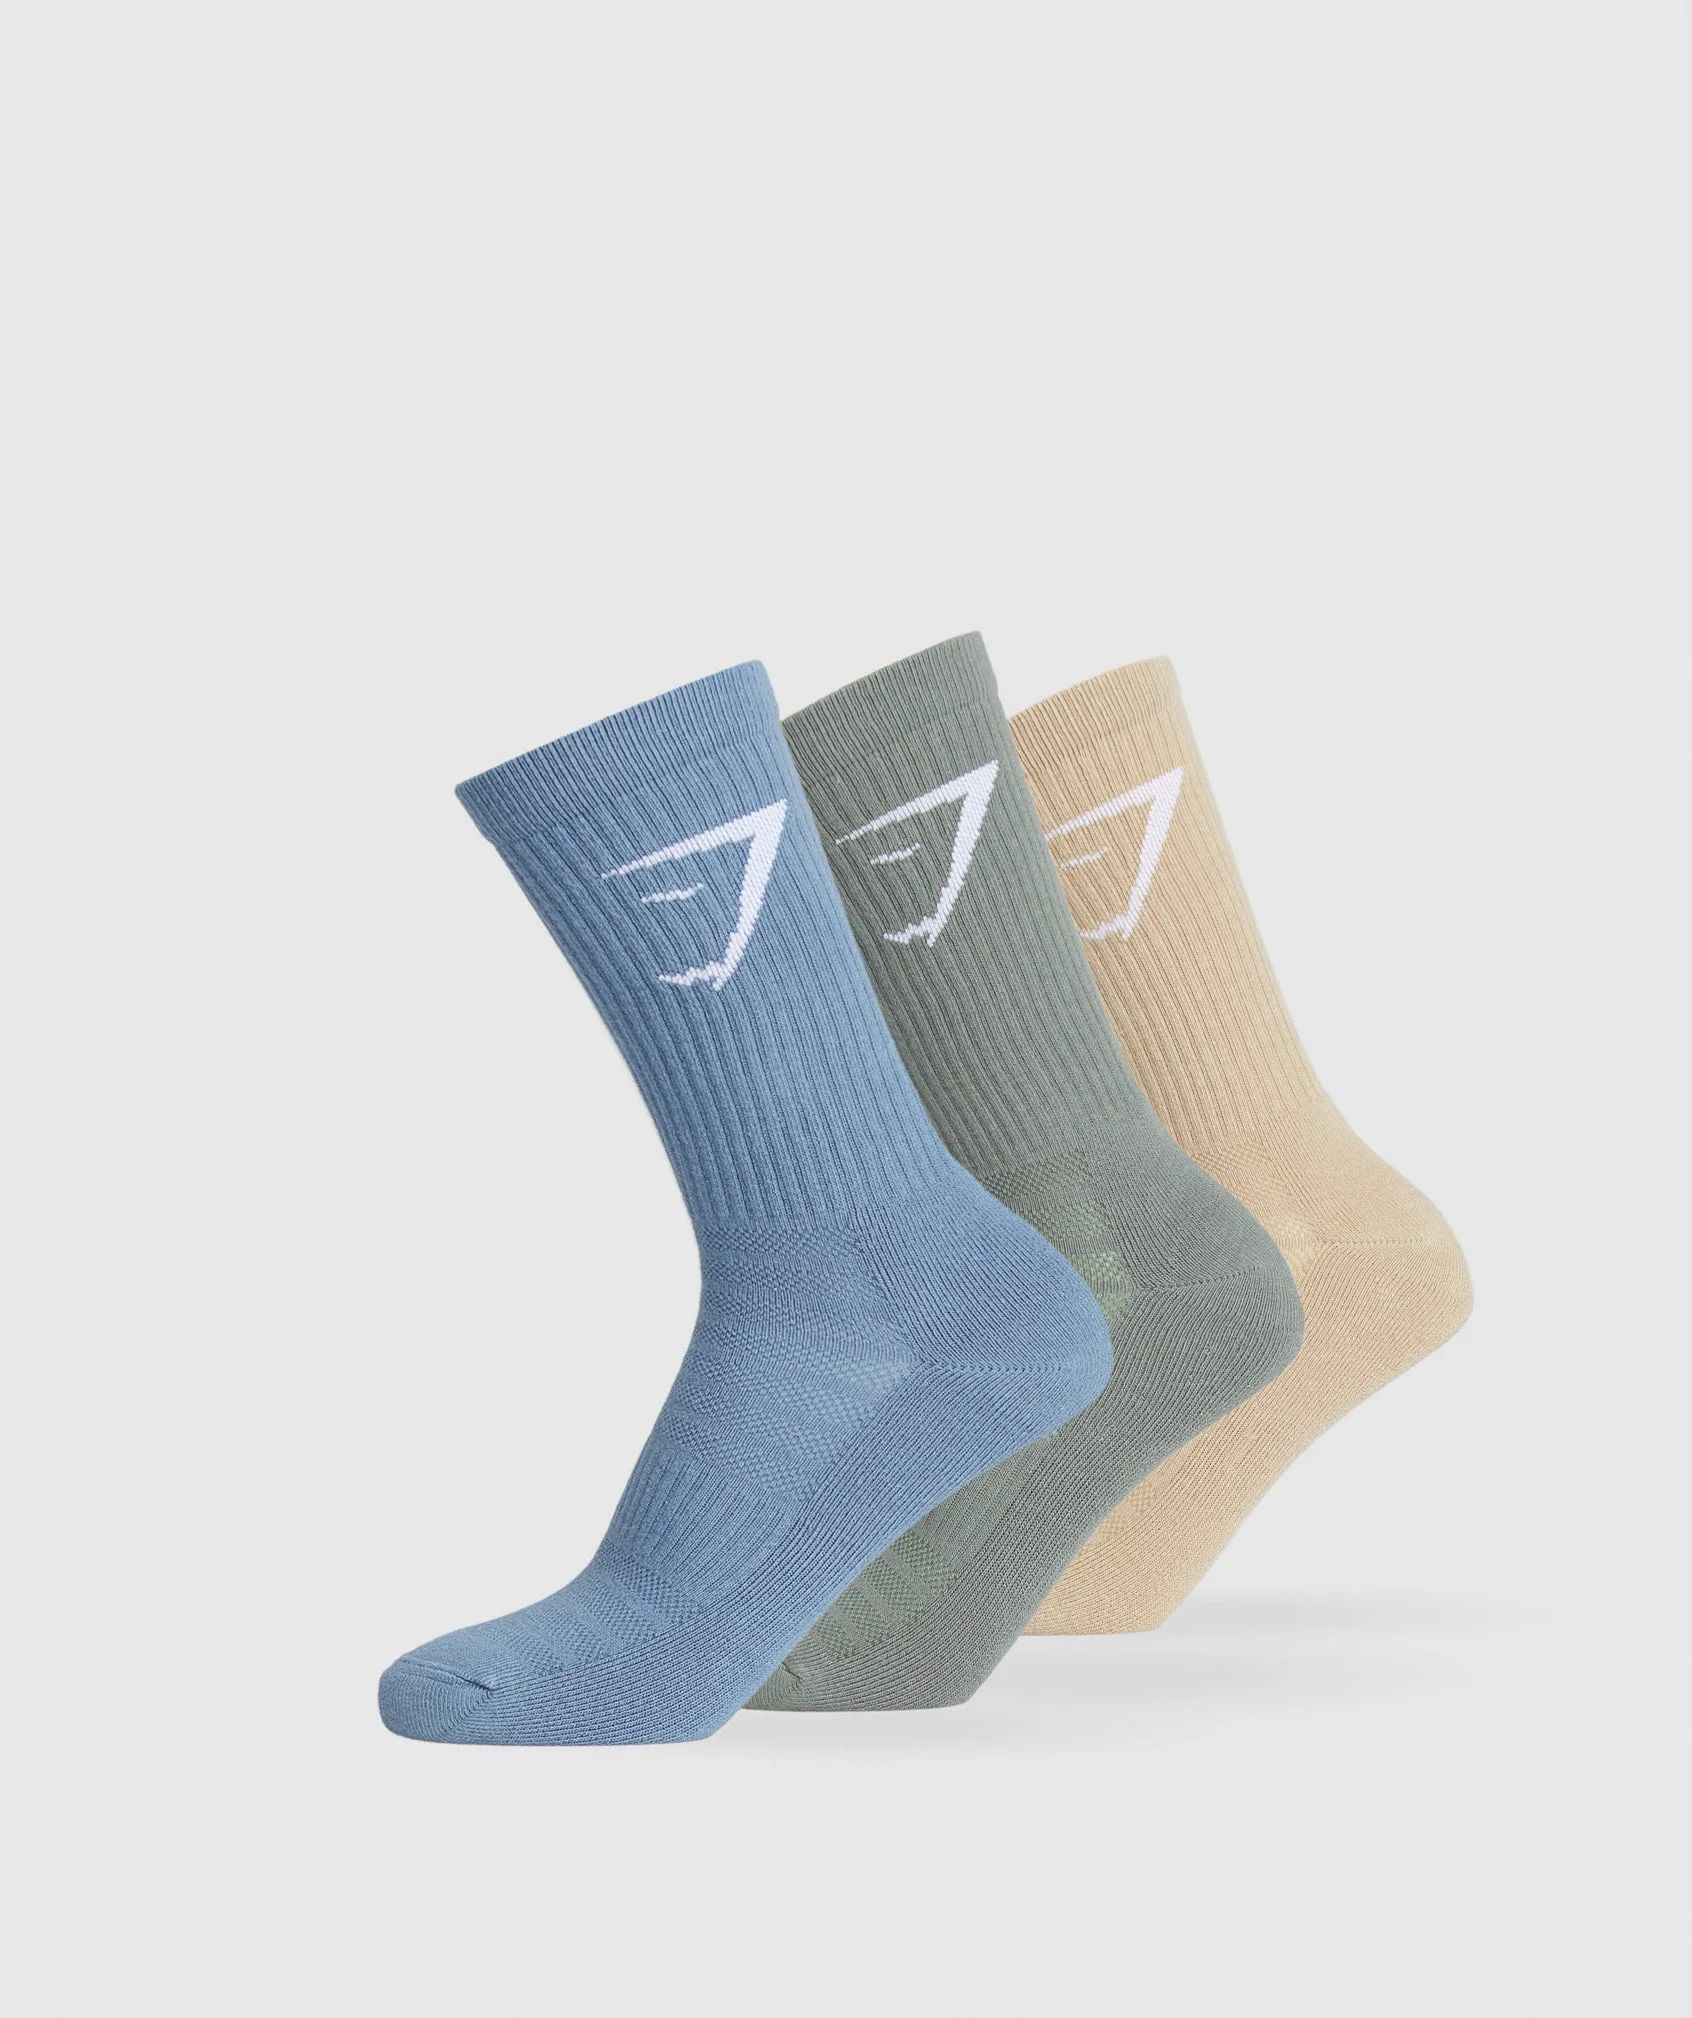 Gymshark Crew Socks 3pk - Vanilla Beige/Unit Green/Faded Blue | Gymshark US